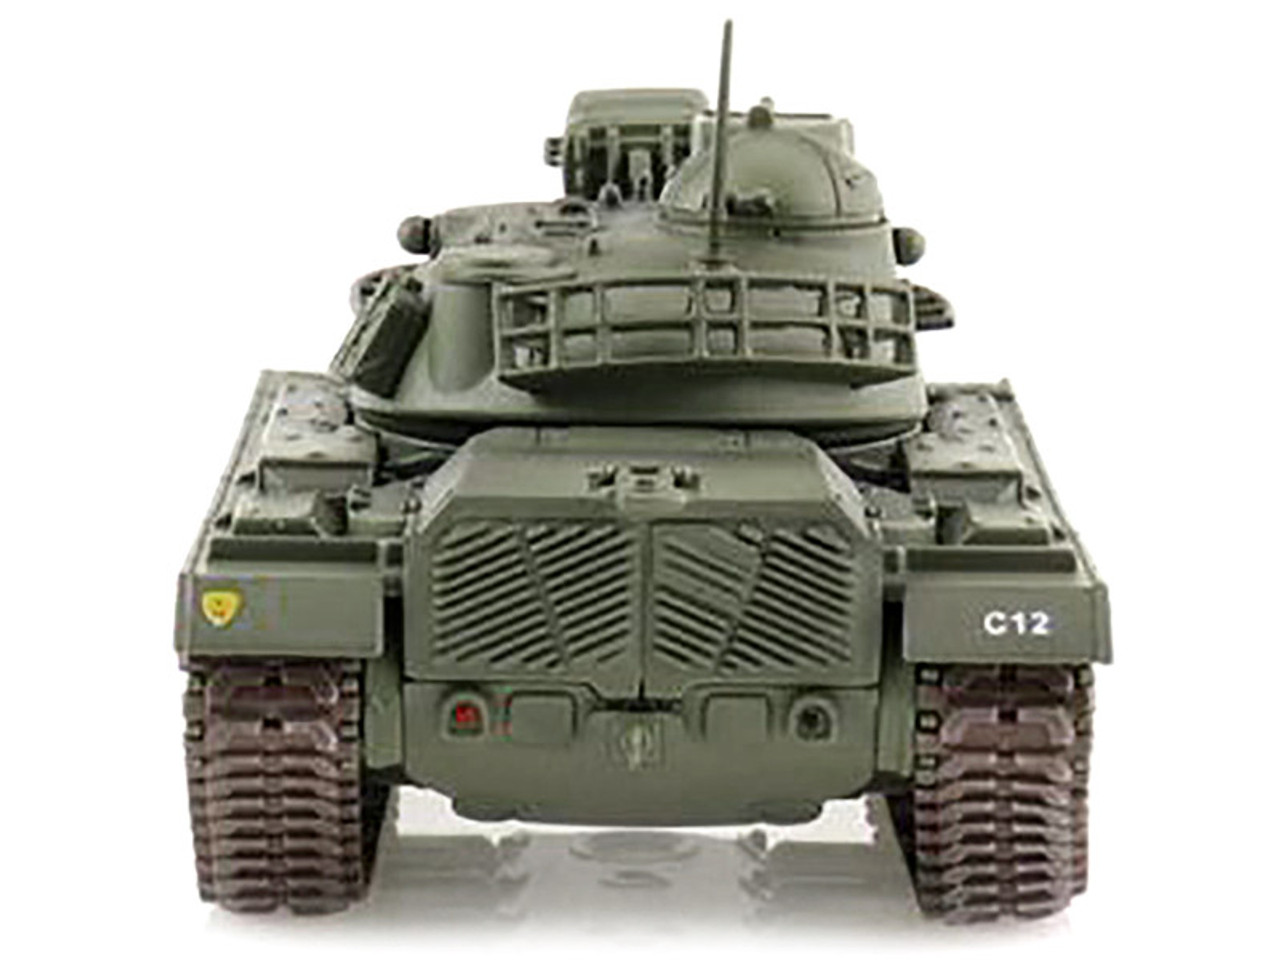 M48A3 Patton Medium Tank "Death" "1st Tank Battalion C Company Vietnam War" 1/72 Scale Model by Hobby Master